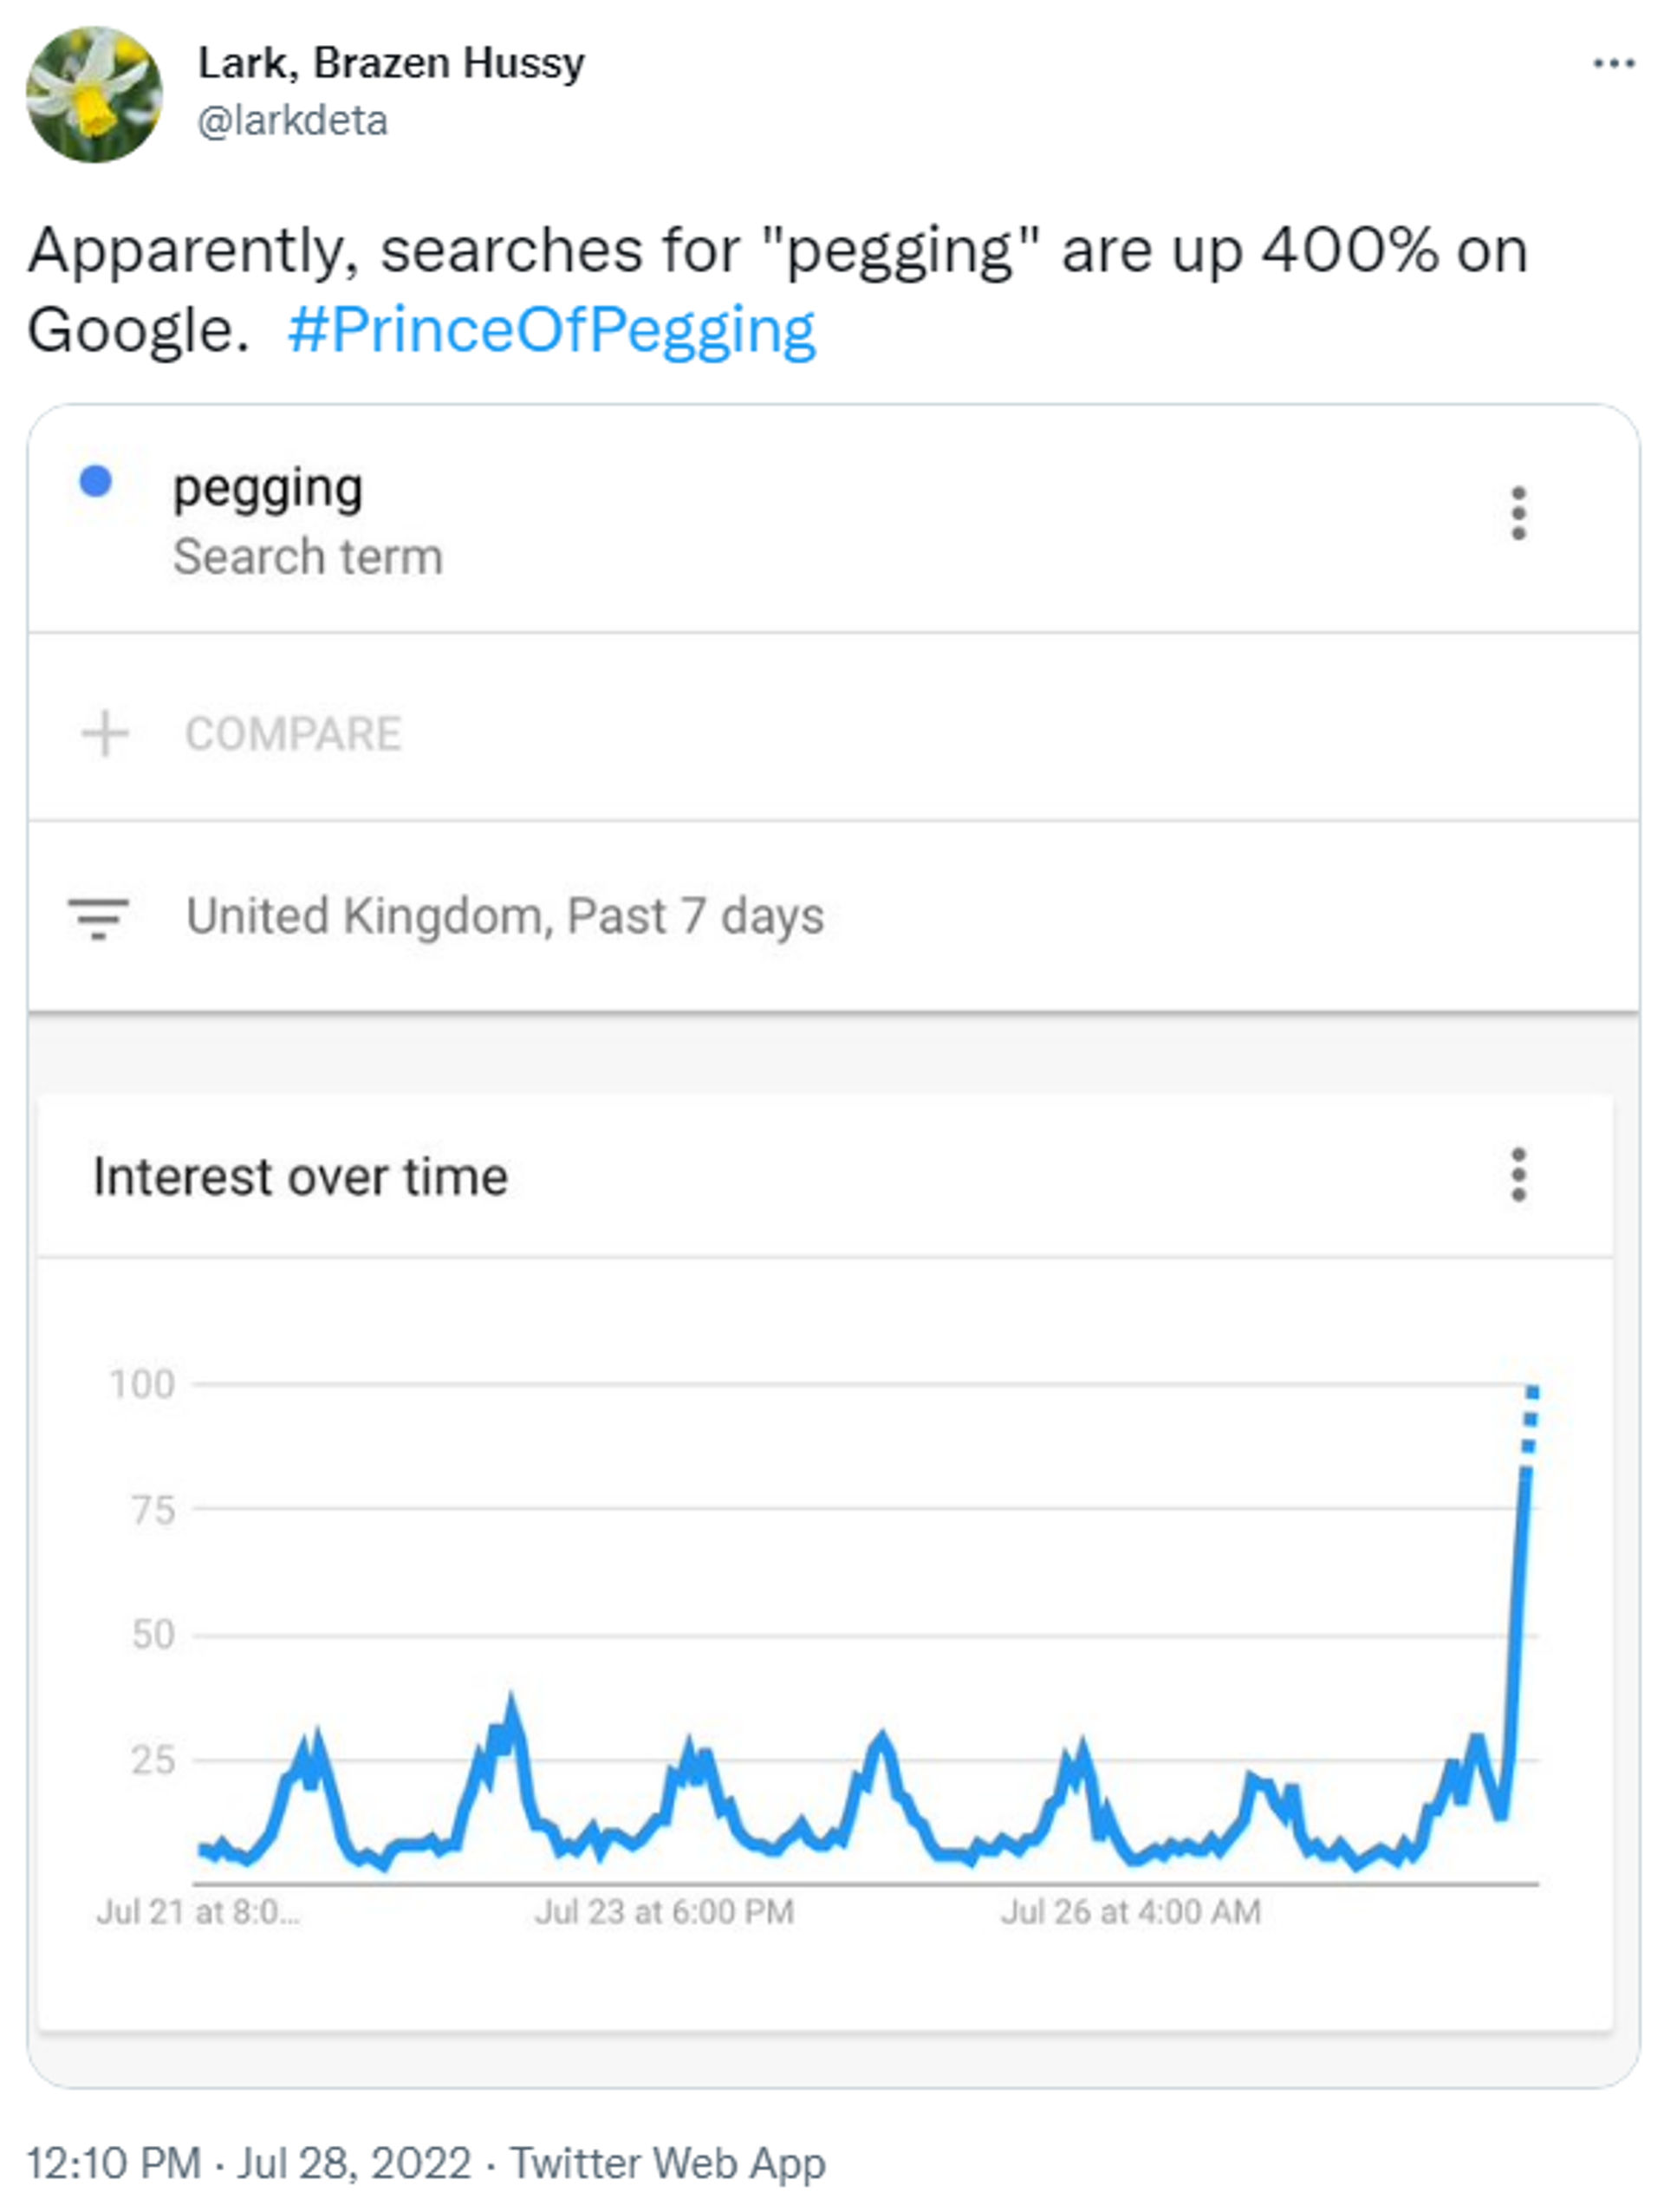 Tweet illustrating the #PrinceOfPegging trend - Sputnik International, 1920, 28.07.2022